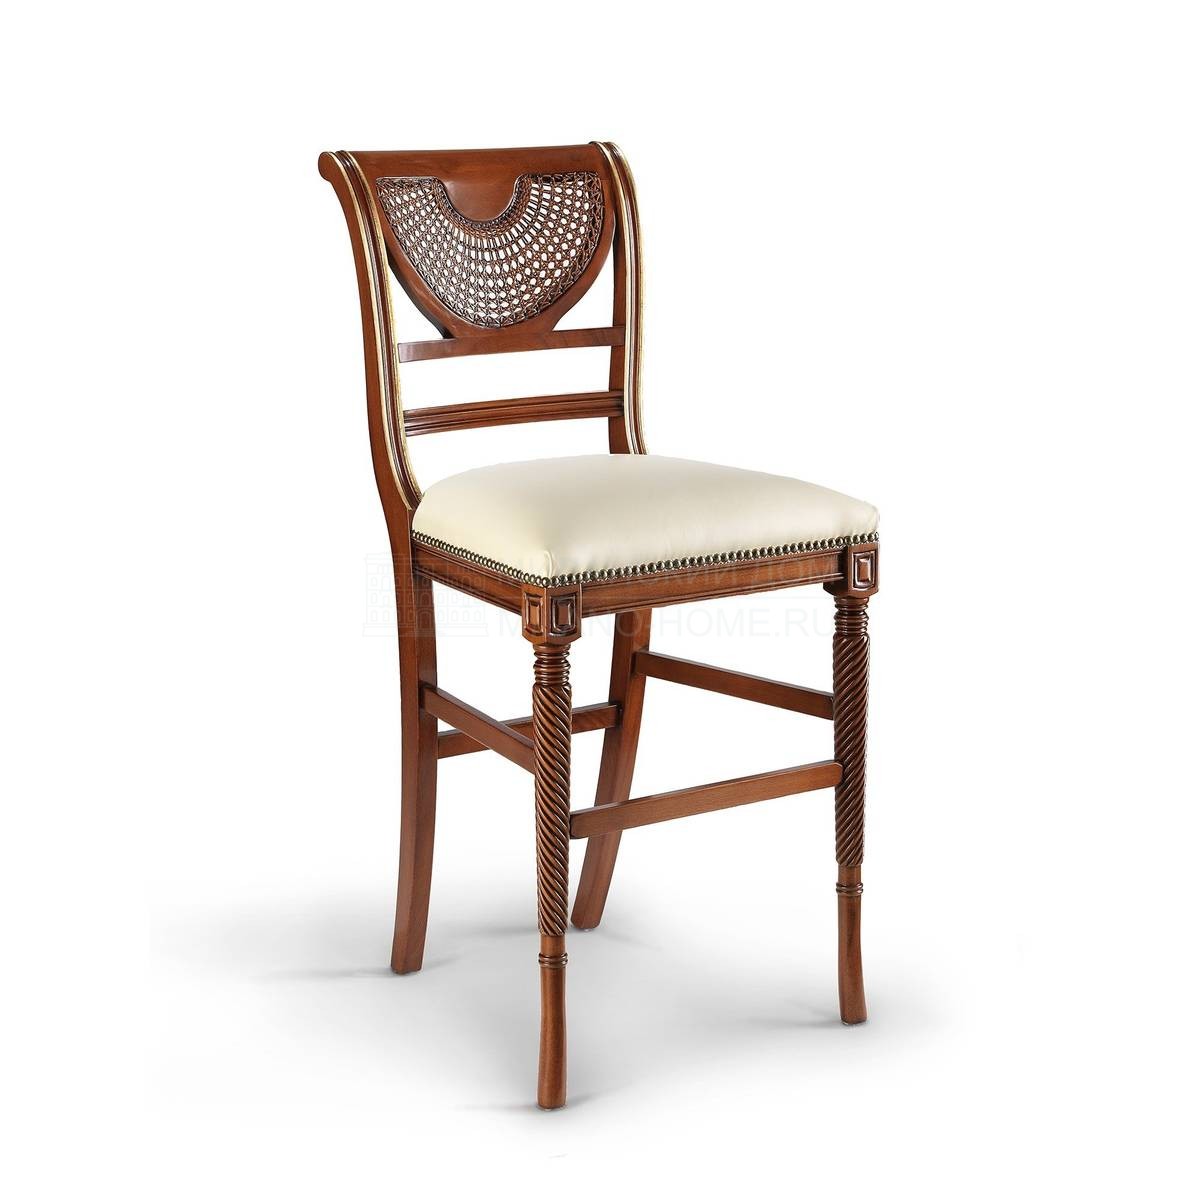 Барный стул The Upholstery/S407 из Италии фабрики FRANCESCO MOLON